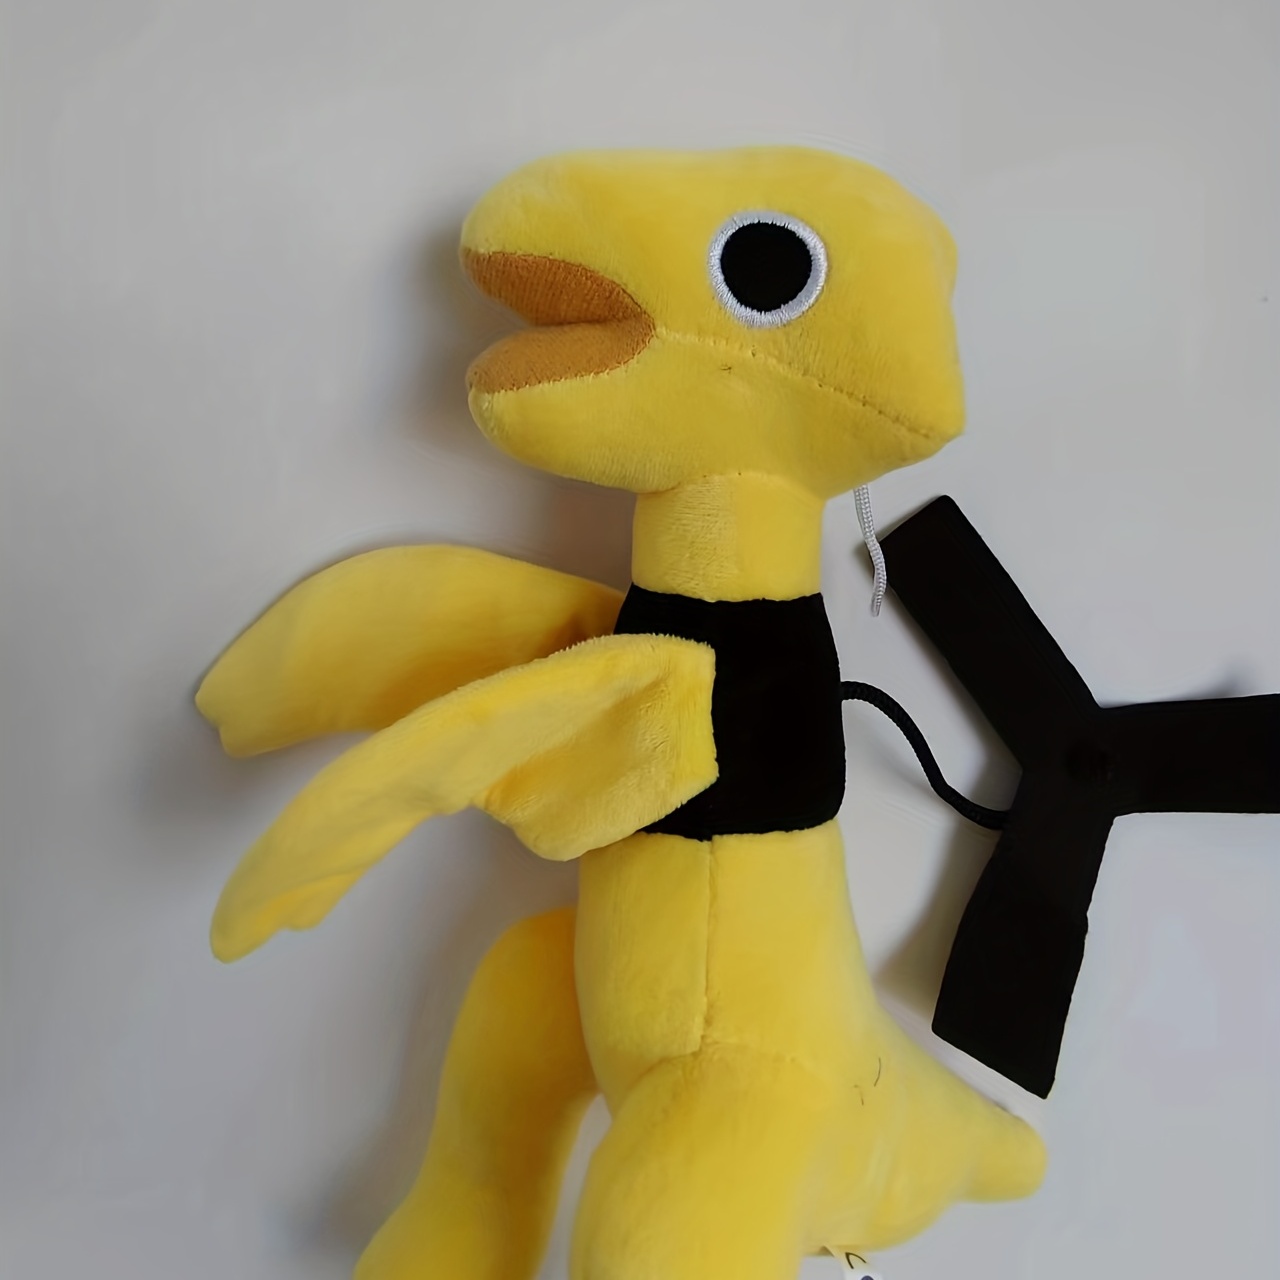 Children's toy - Dancing and singing ROBLOX RAINBOW FRIENDS mascot - yellow